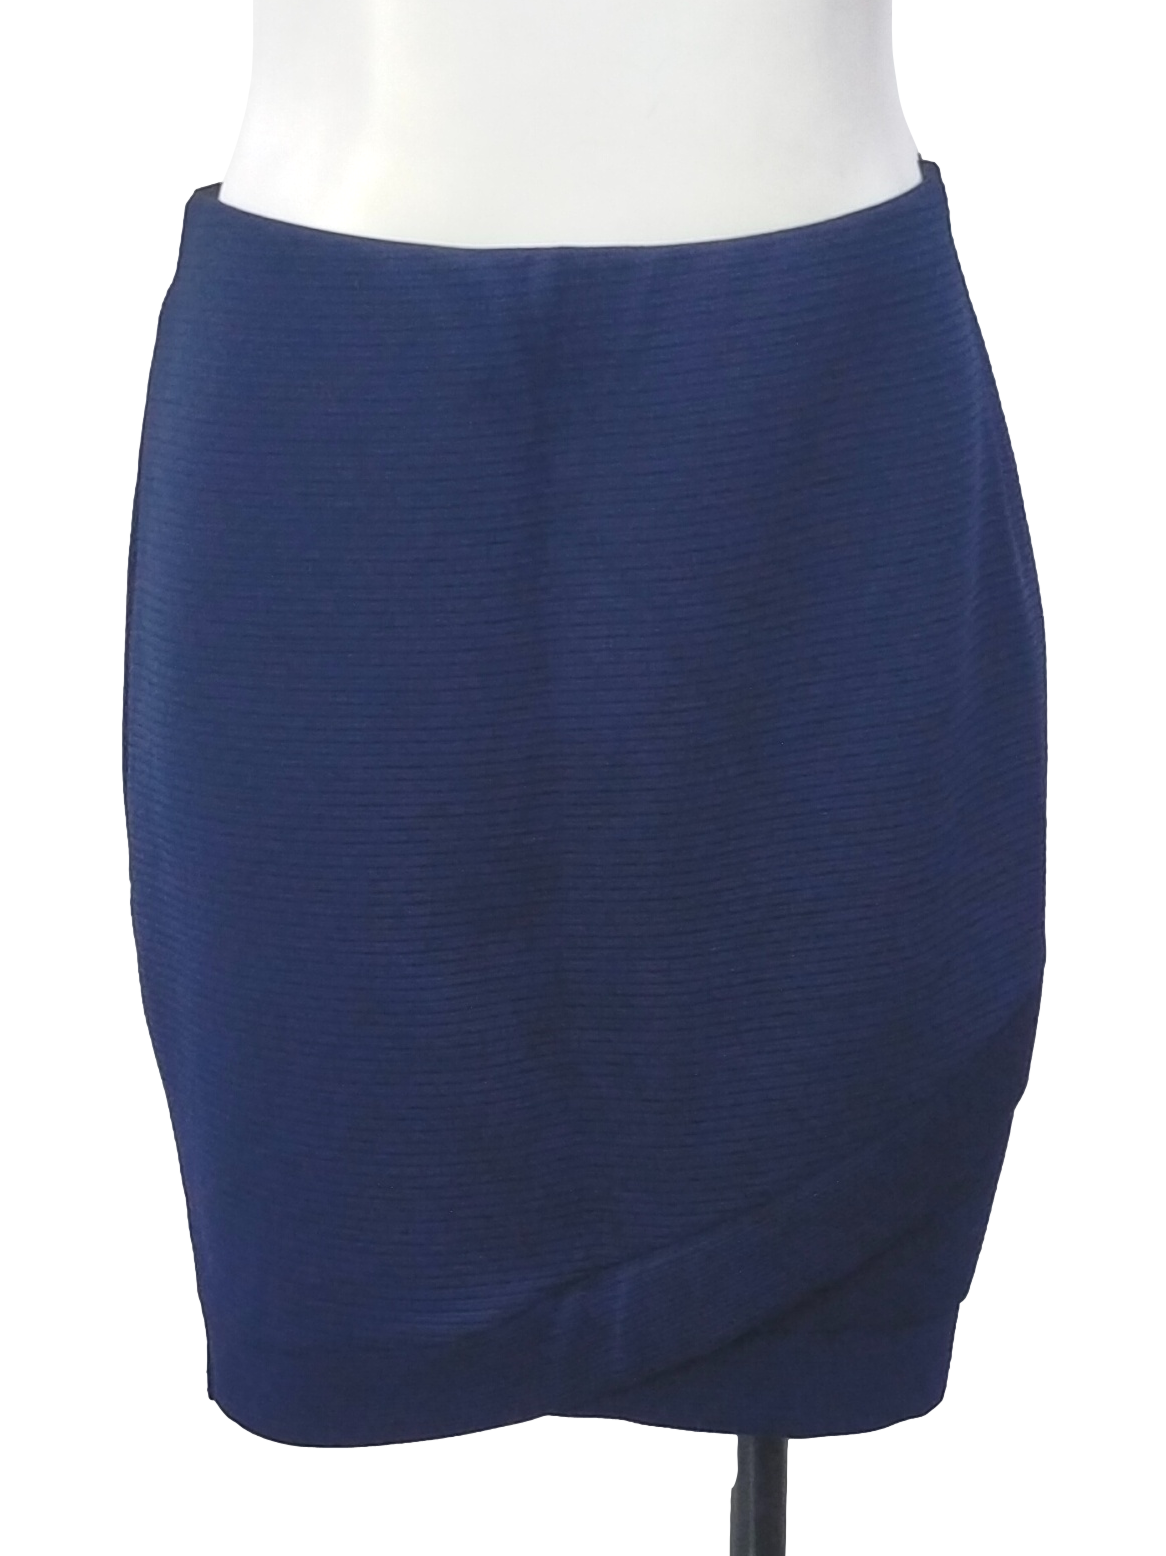 Navy Blue Pegged Skirt